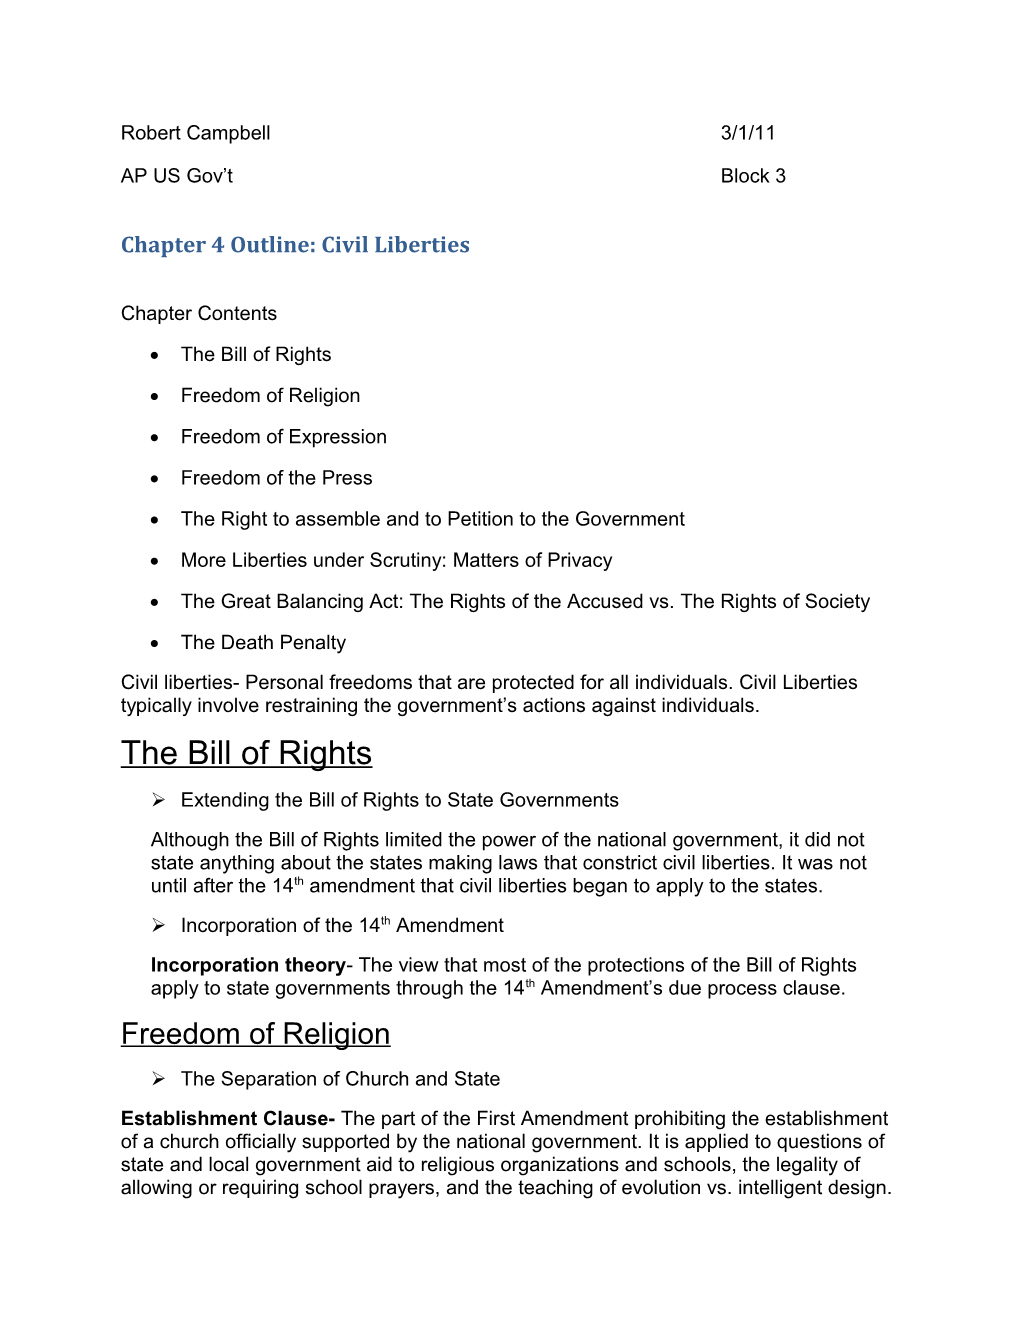 Chapter 4 Outline: Civil Liberties